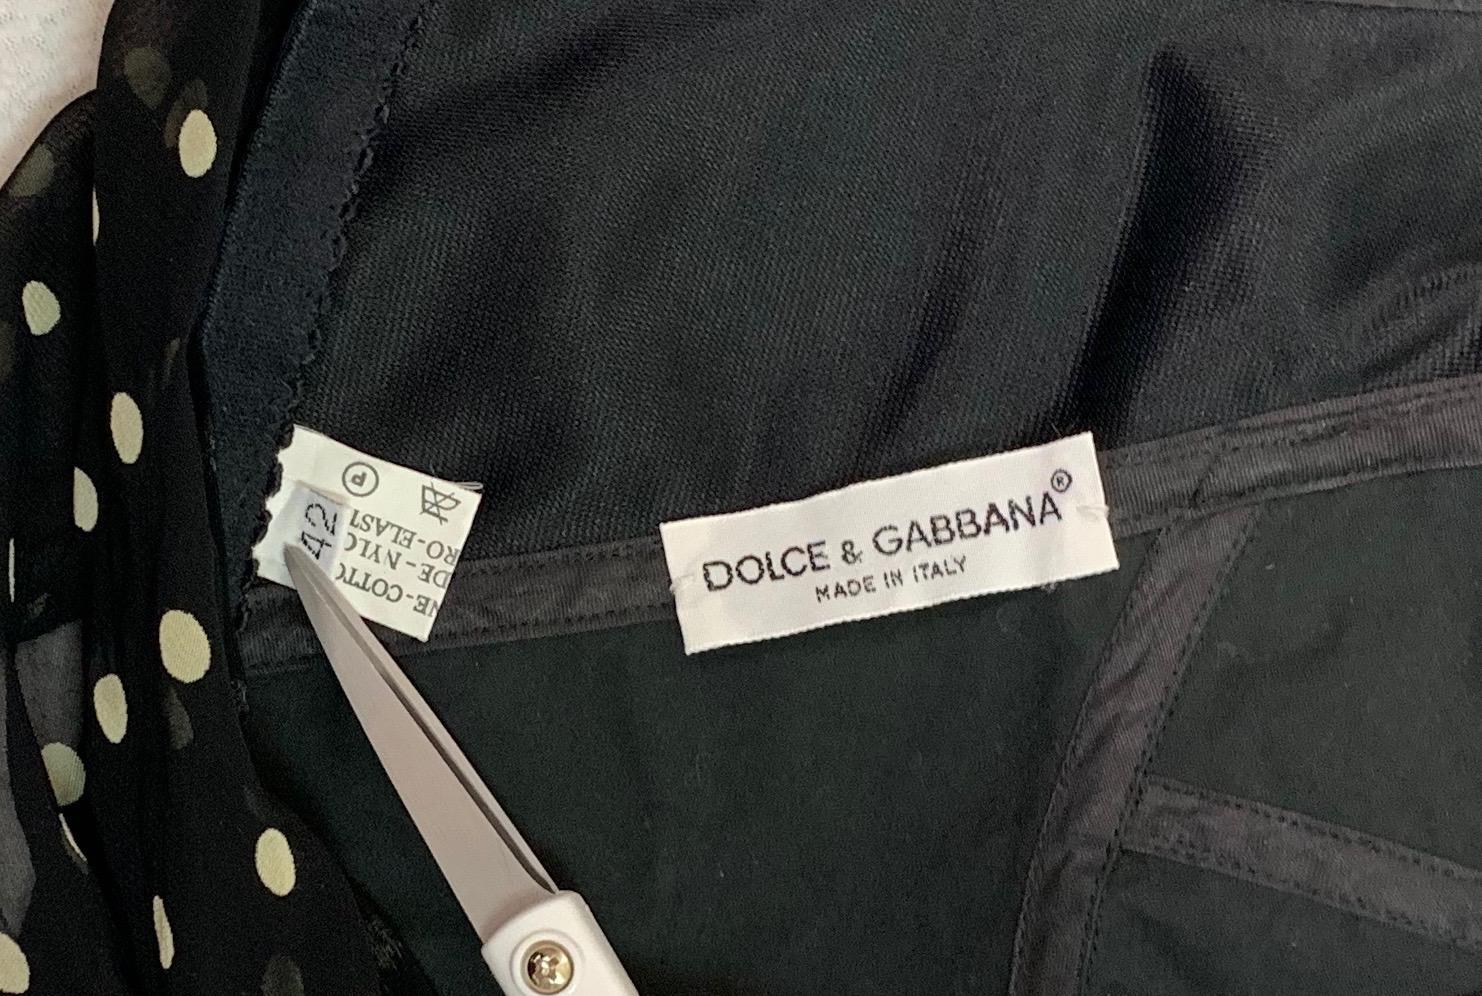 1991 Dolce & Gabbana Pin-Up Black Bustier Polka Dot Scarf Wrap Top 1